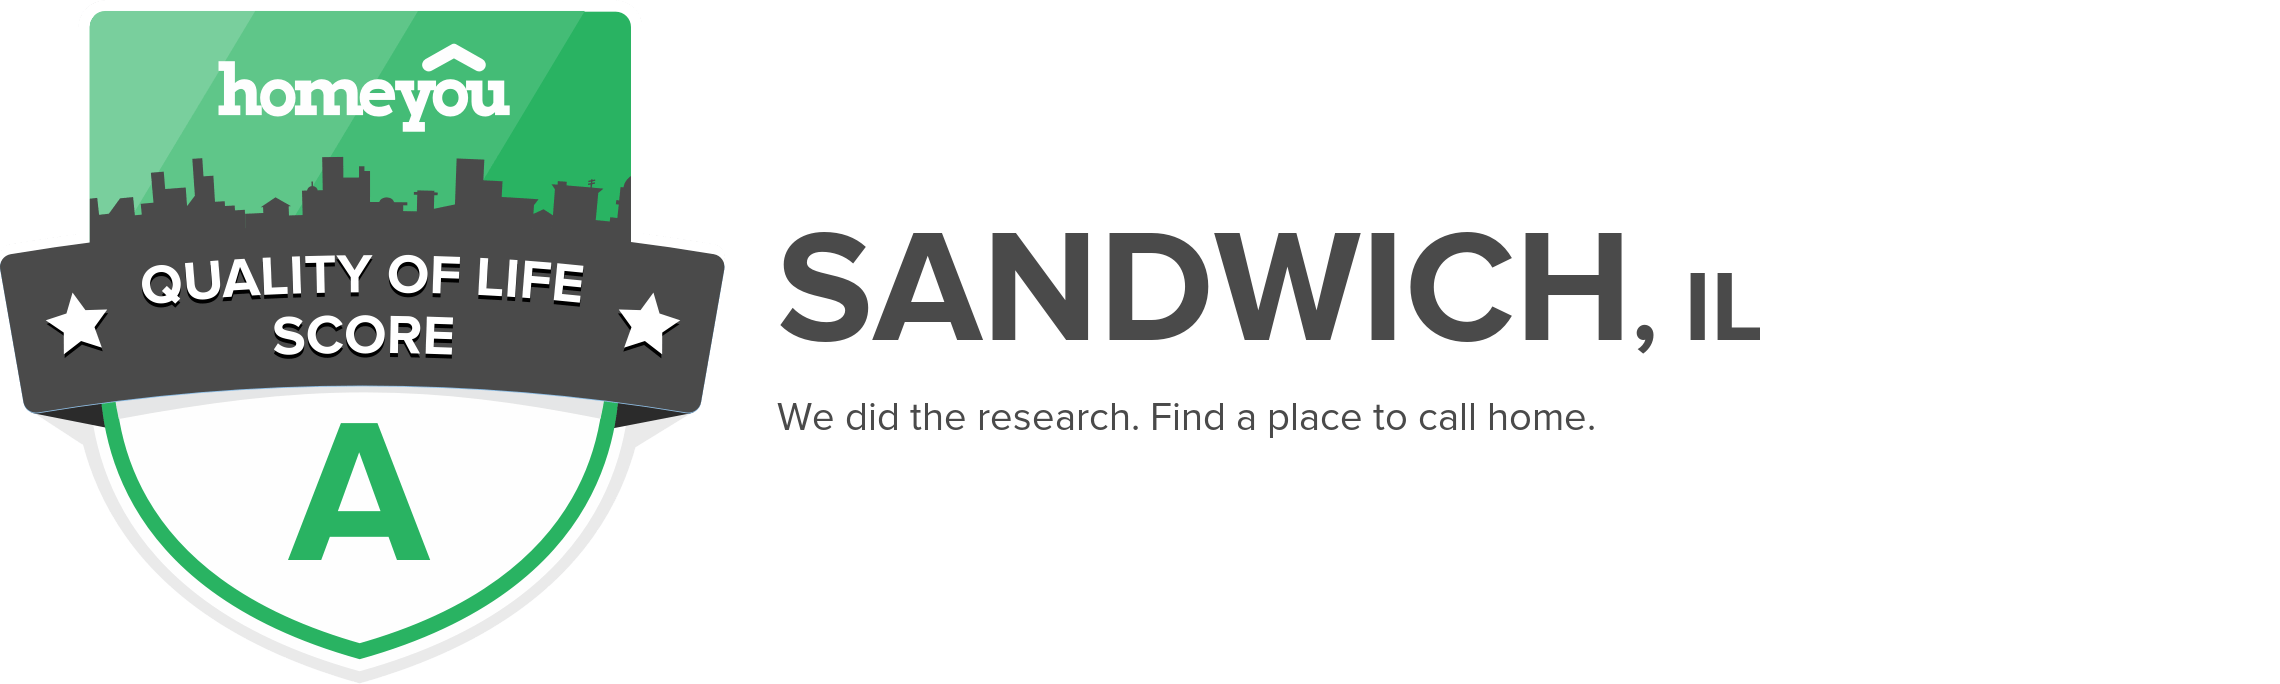 Sandwich, IL